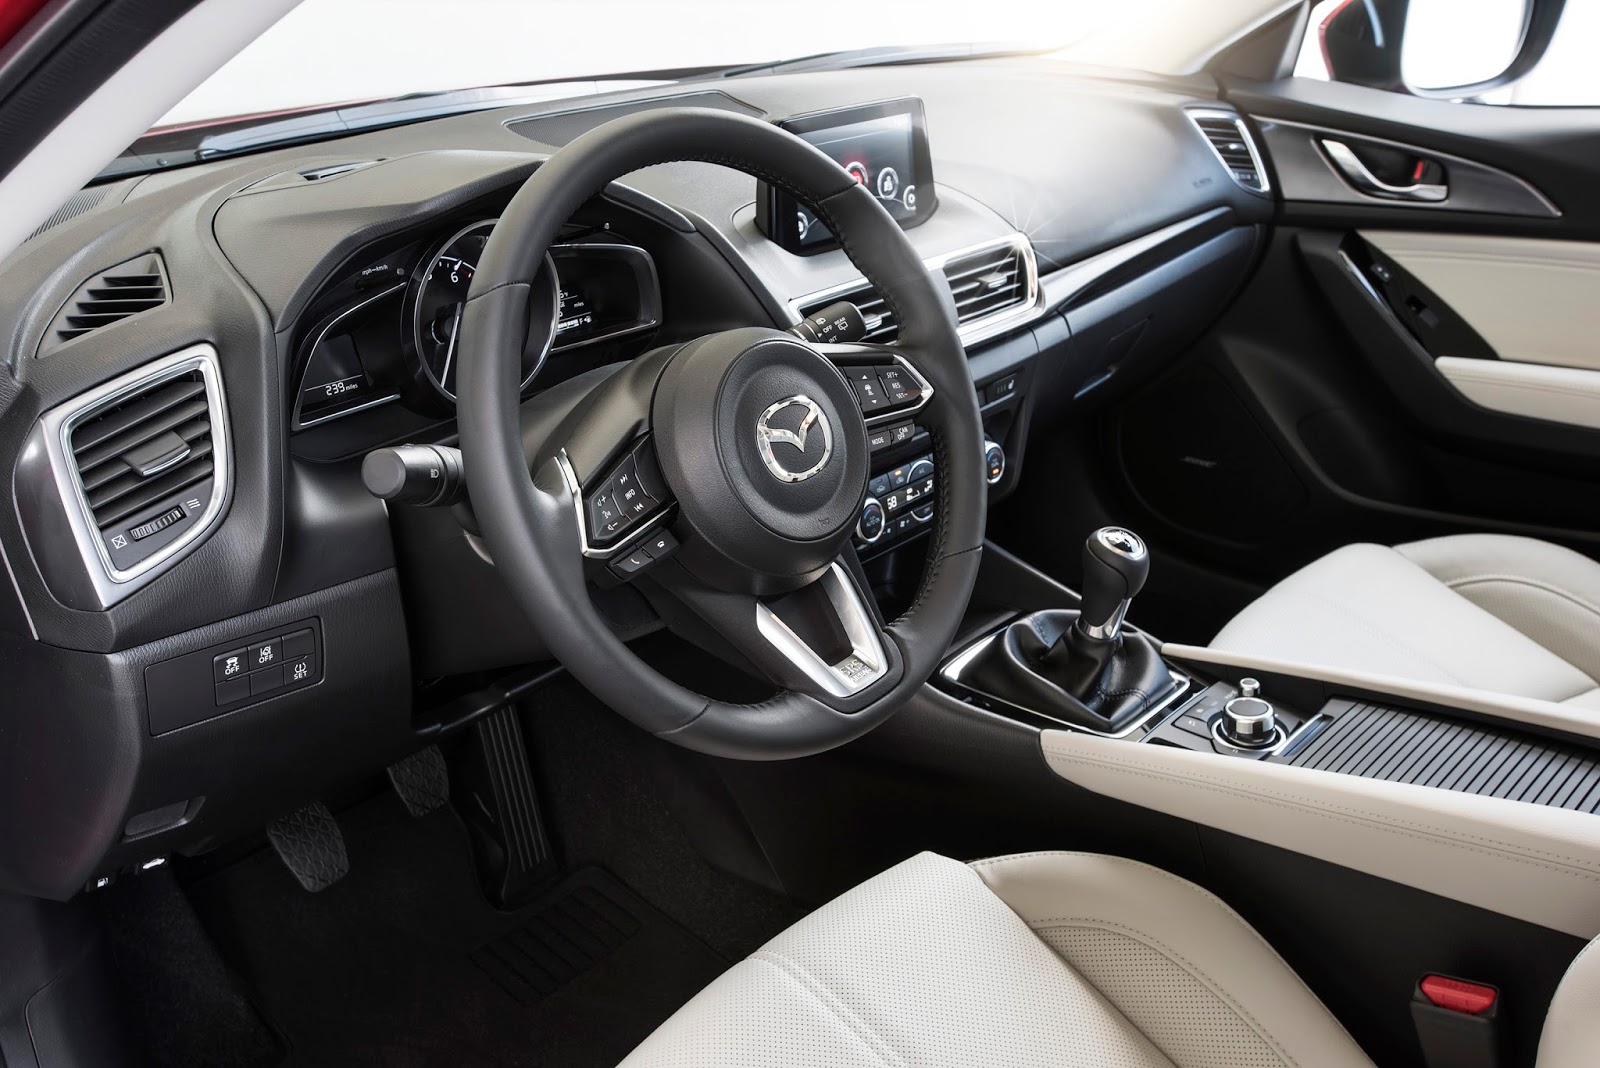 Polishing A Gem: The 2017 Mazda 3 5-Door Grand Touring